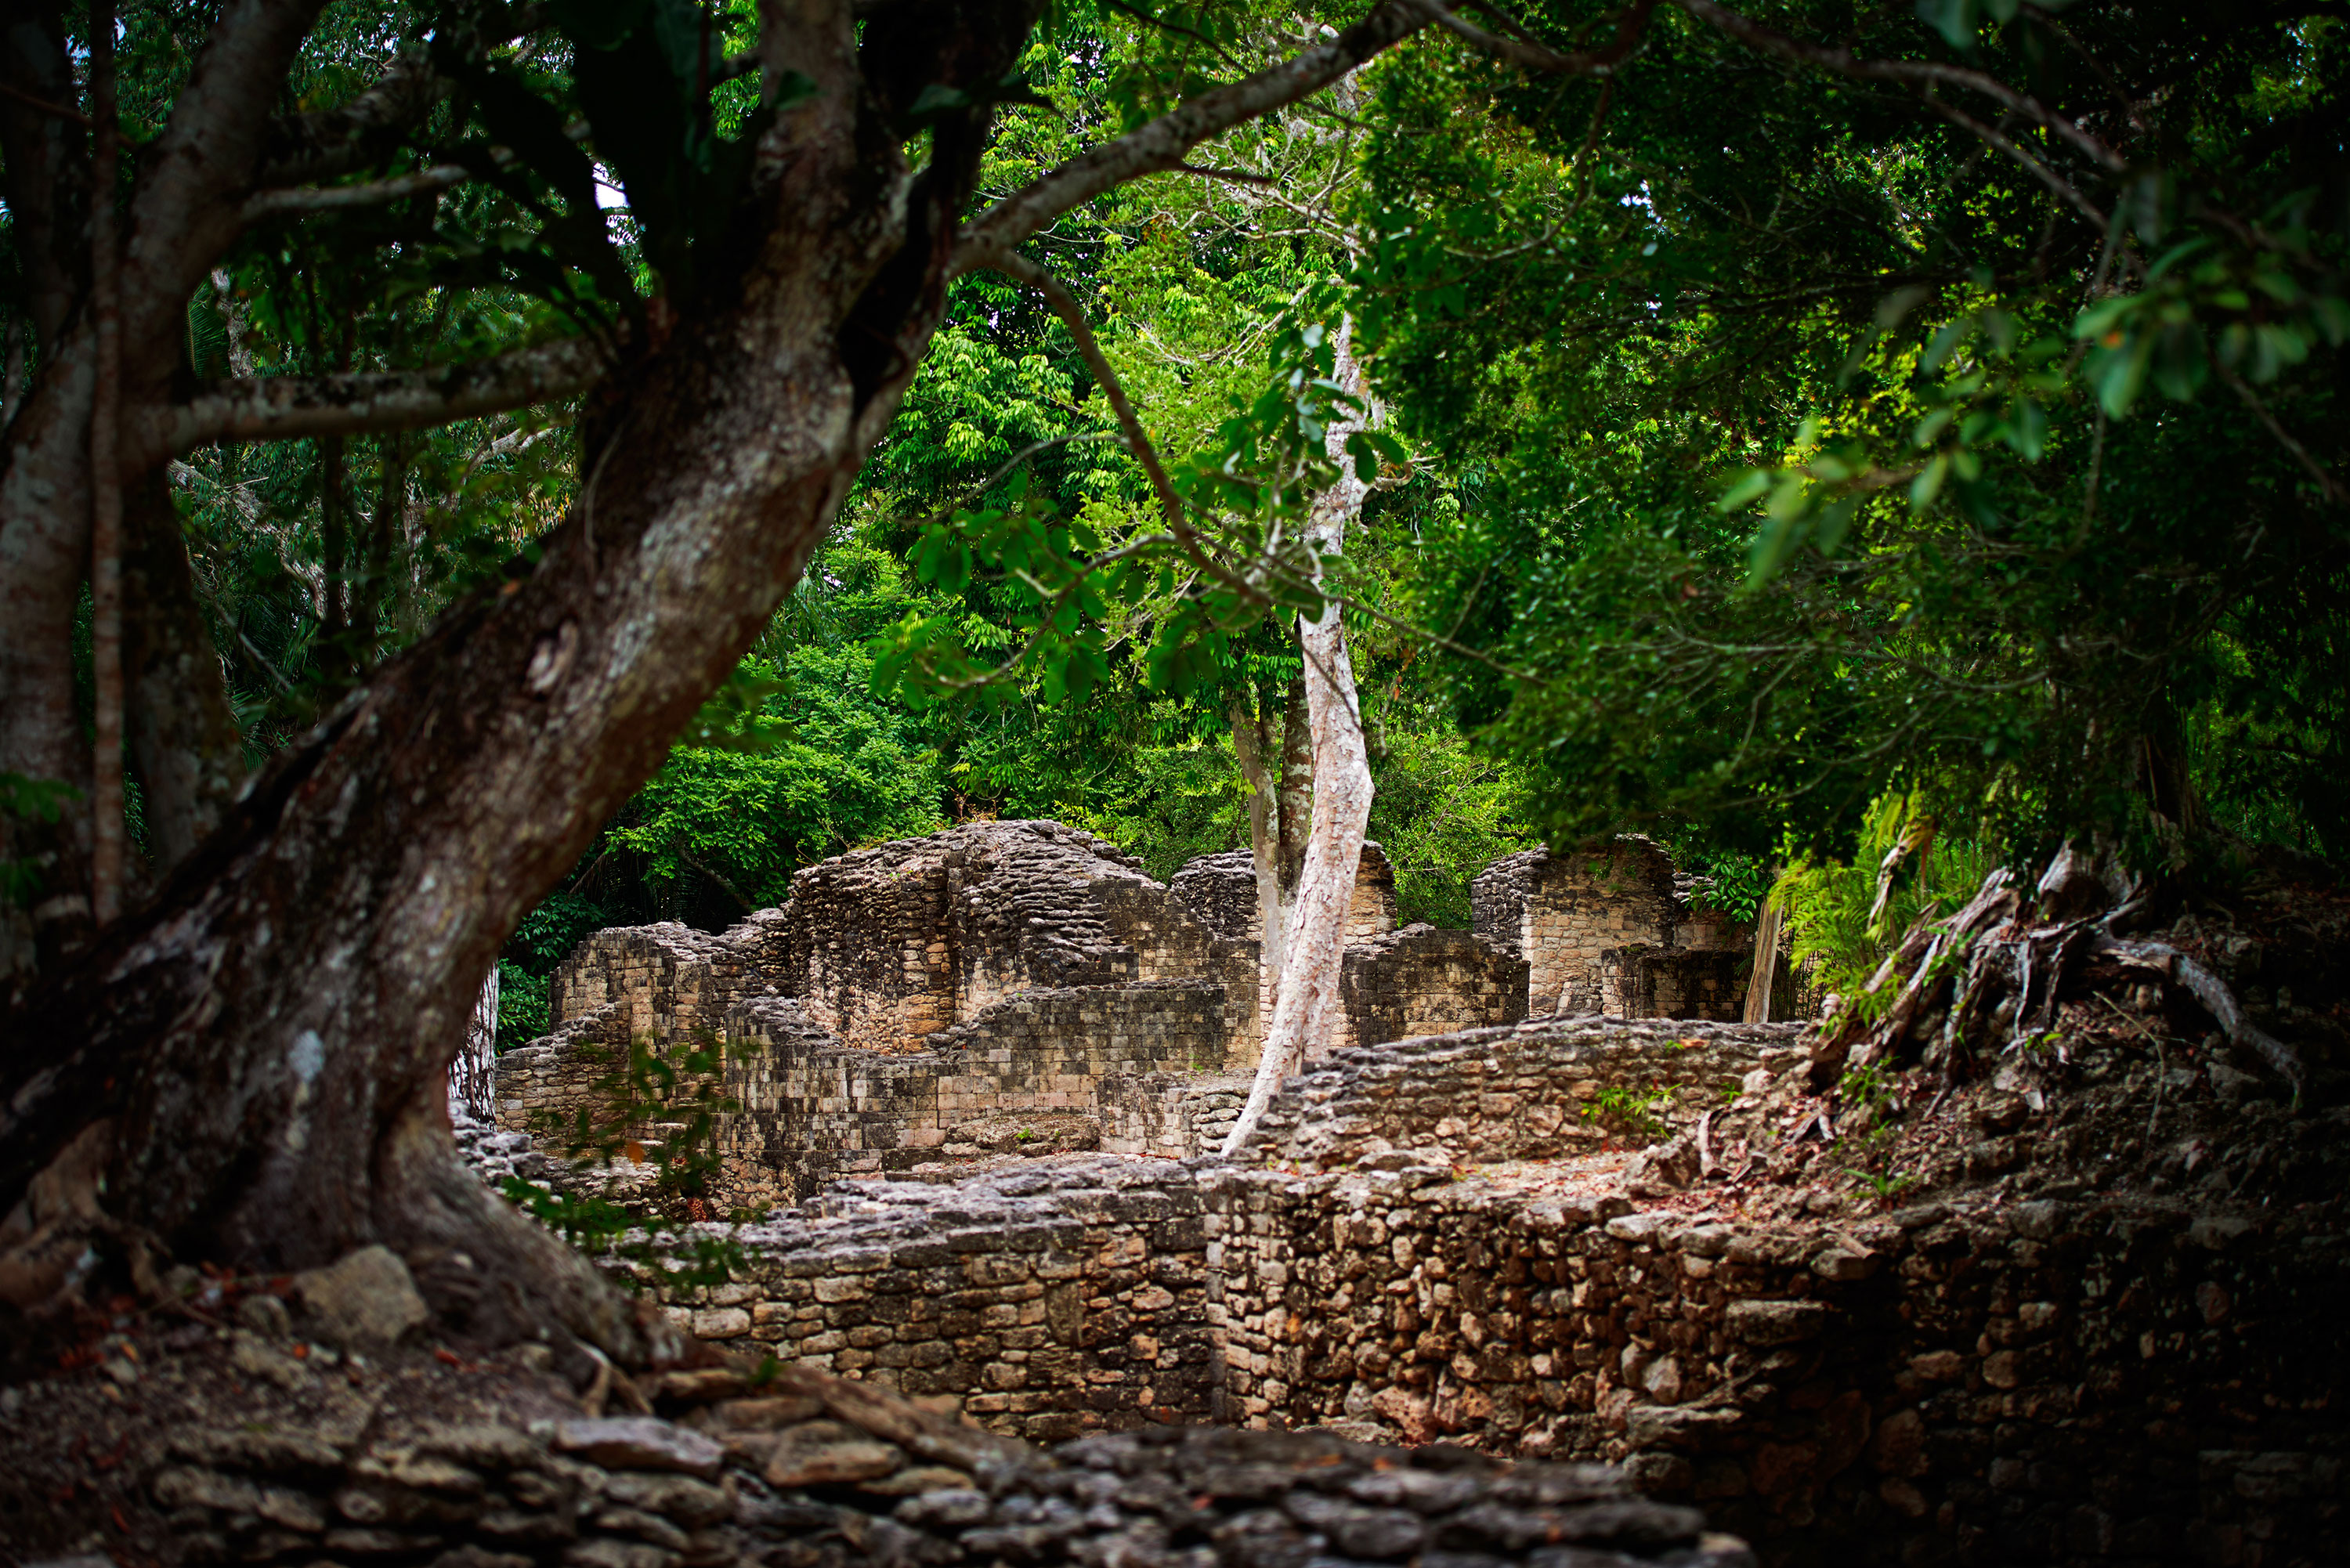 kohunlich mayan ruins